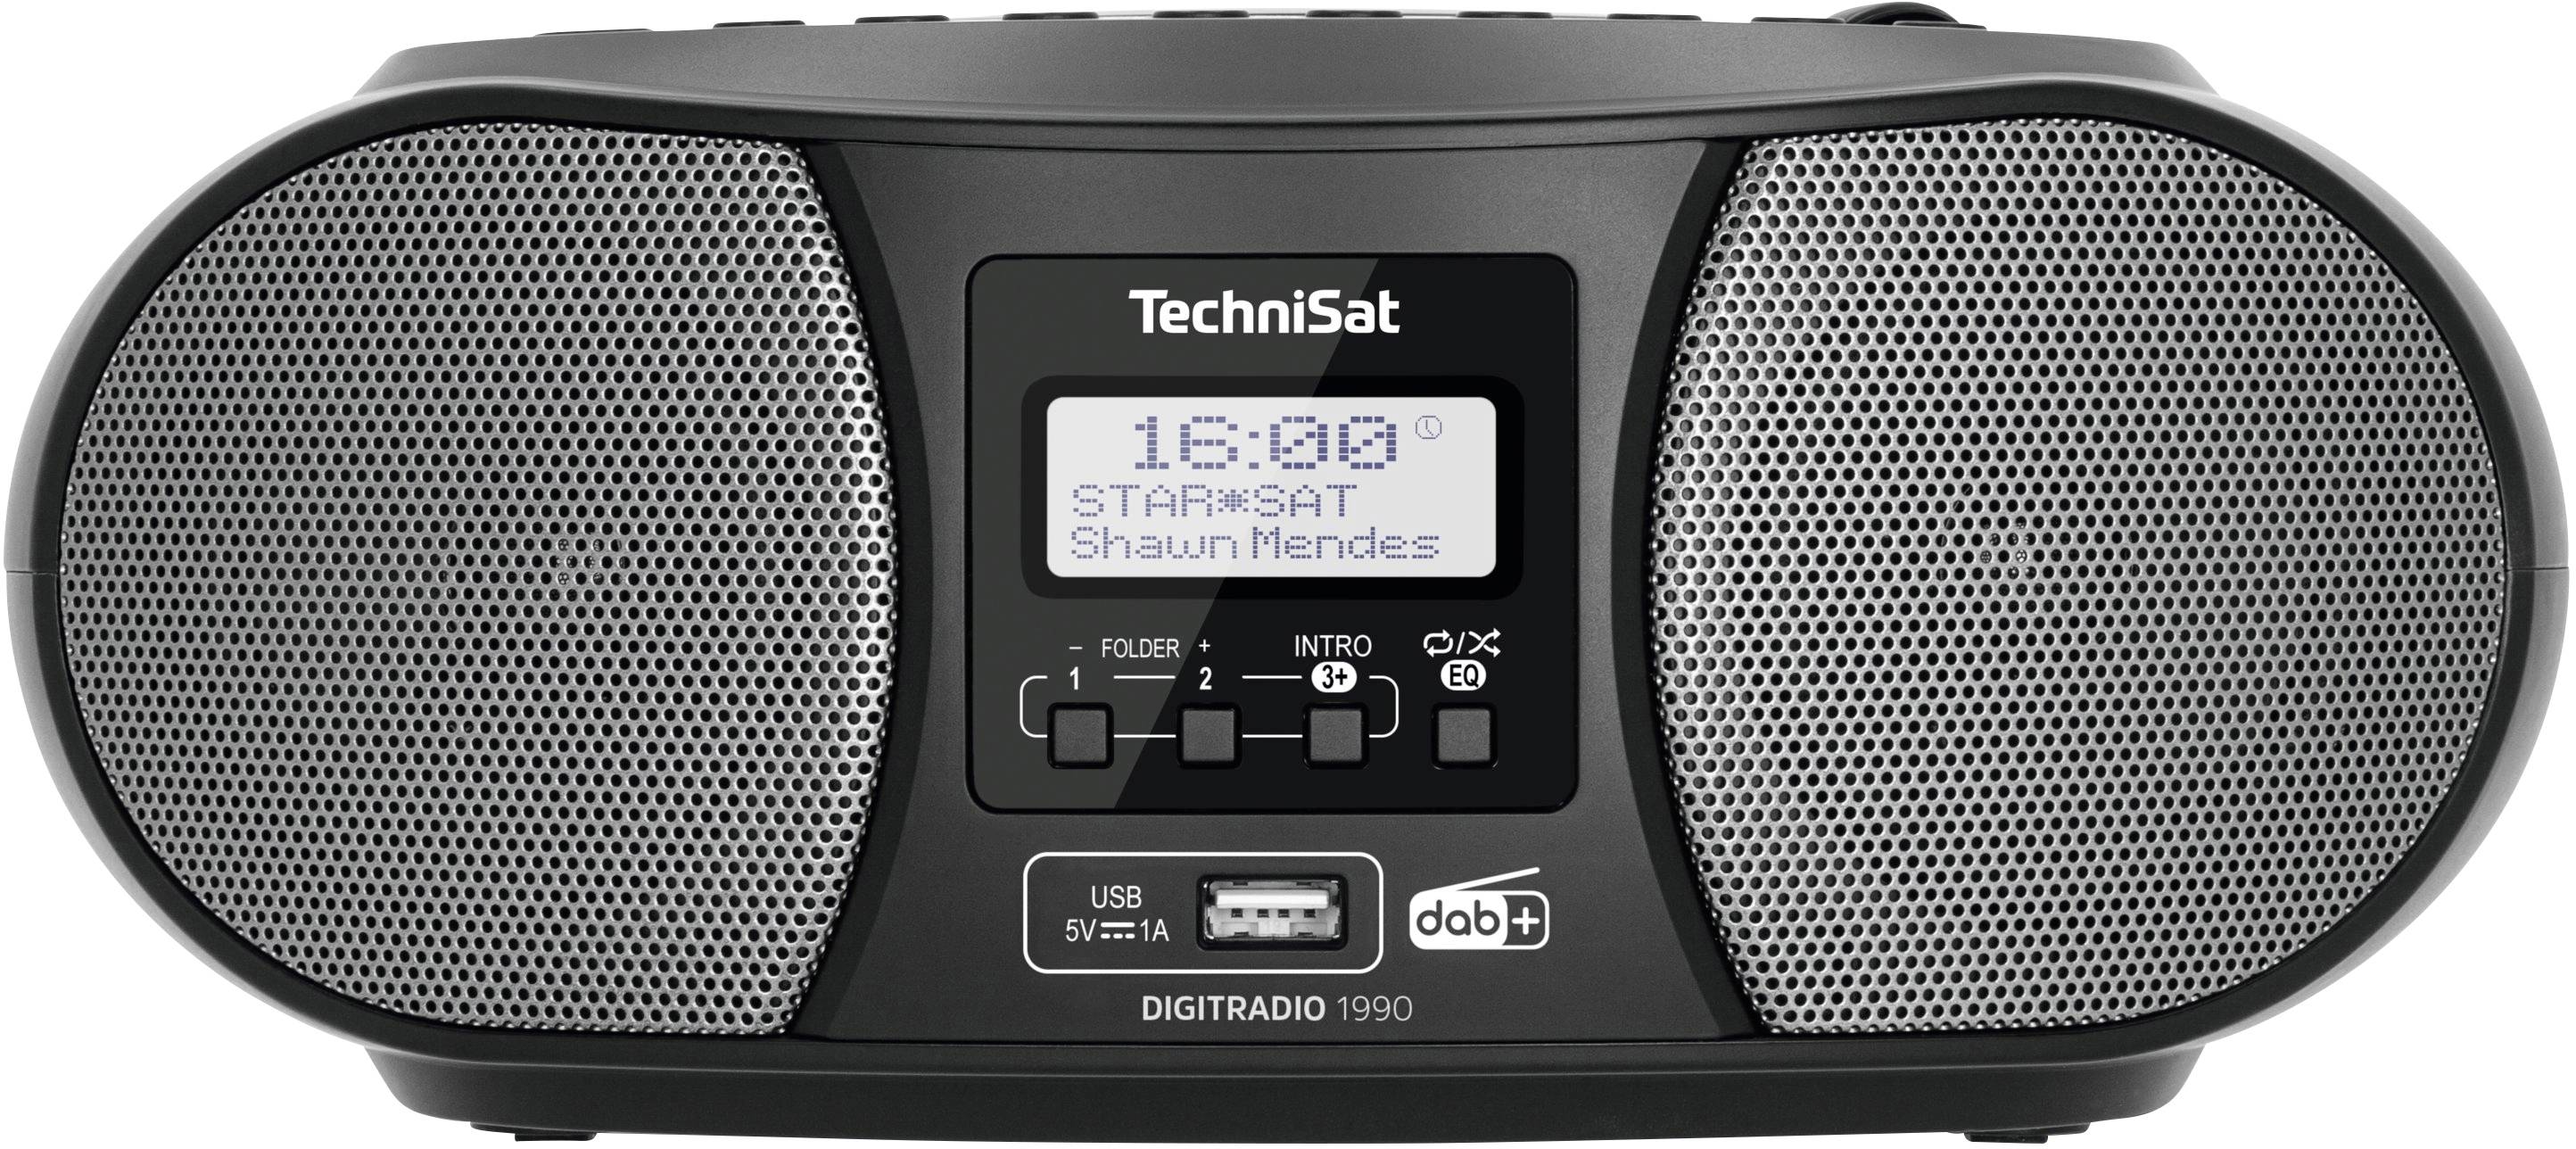 TechniSat DIGITRADIO 1990 CD-Radio DAB+, UKW AUX, Bluetooth®, CD, USB  Akku-Ladefunktion, Weckfunktion Schwarz kaufen